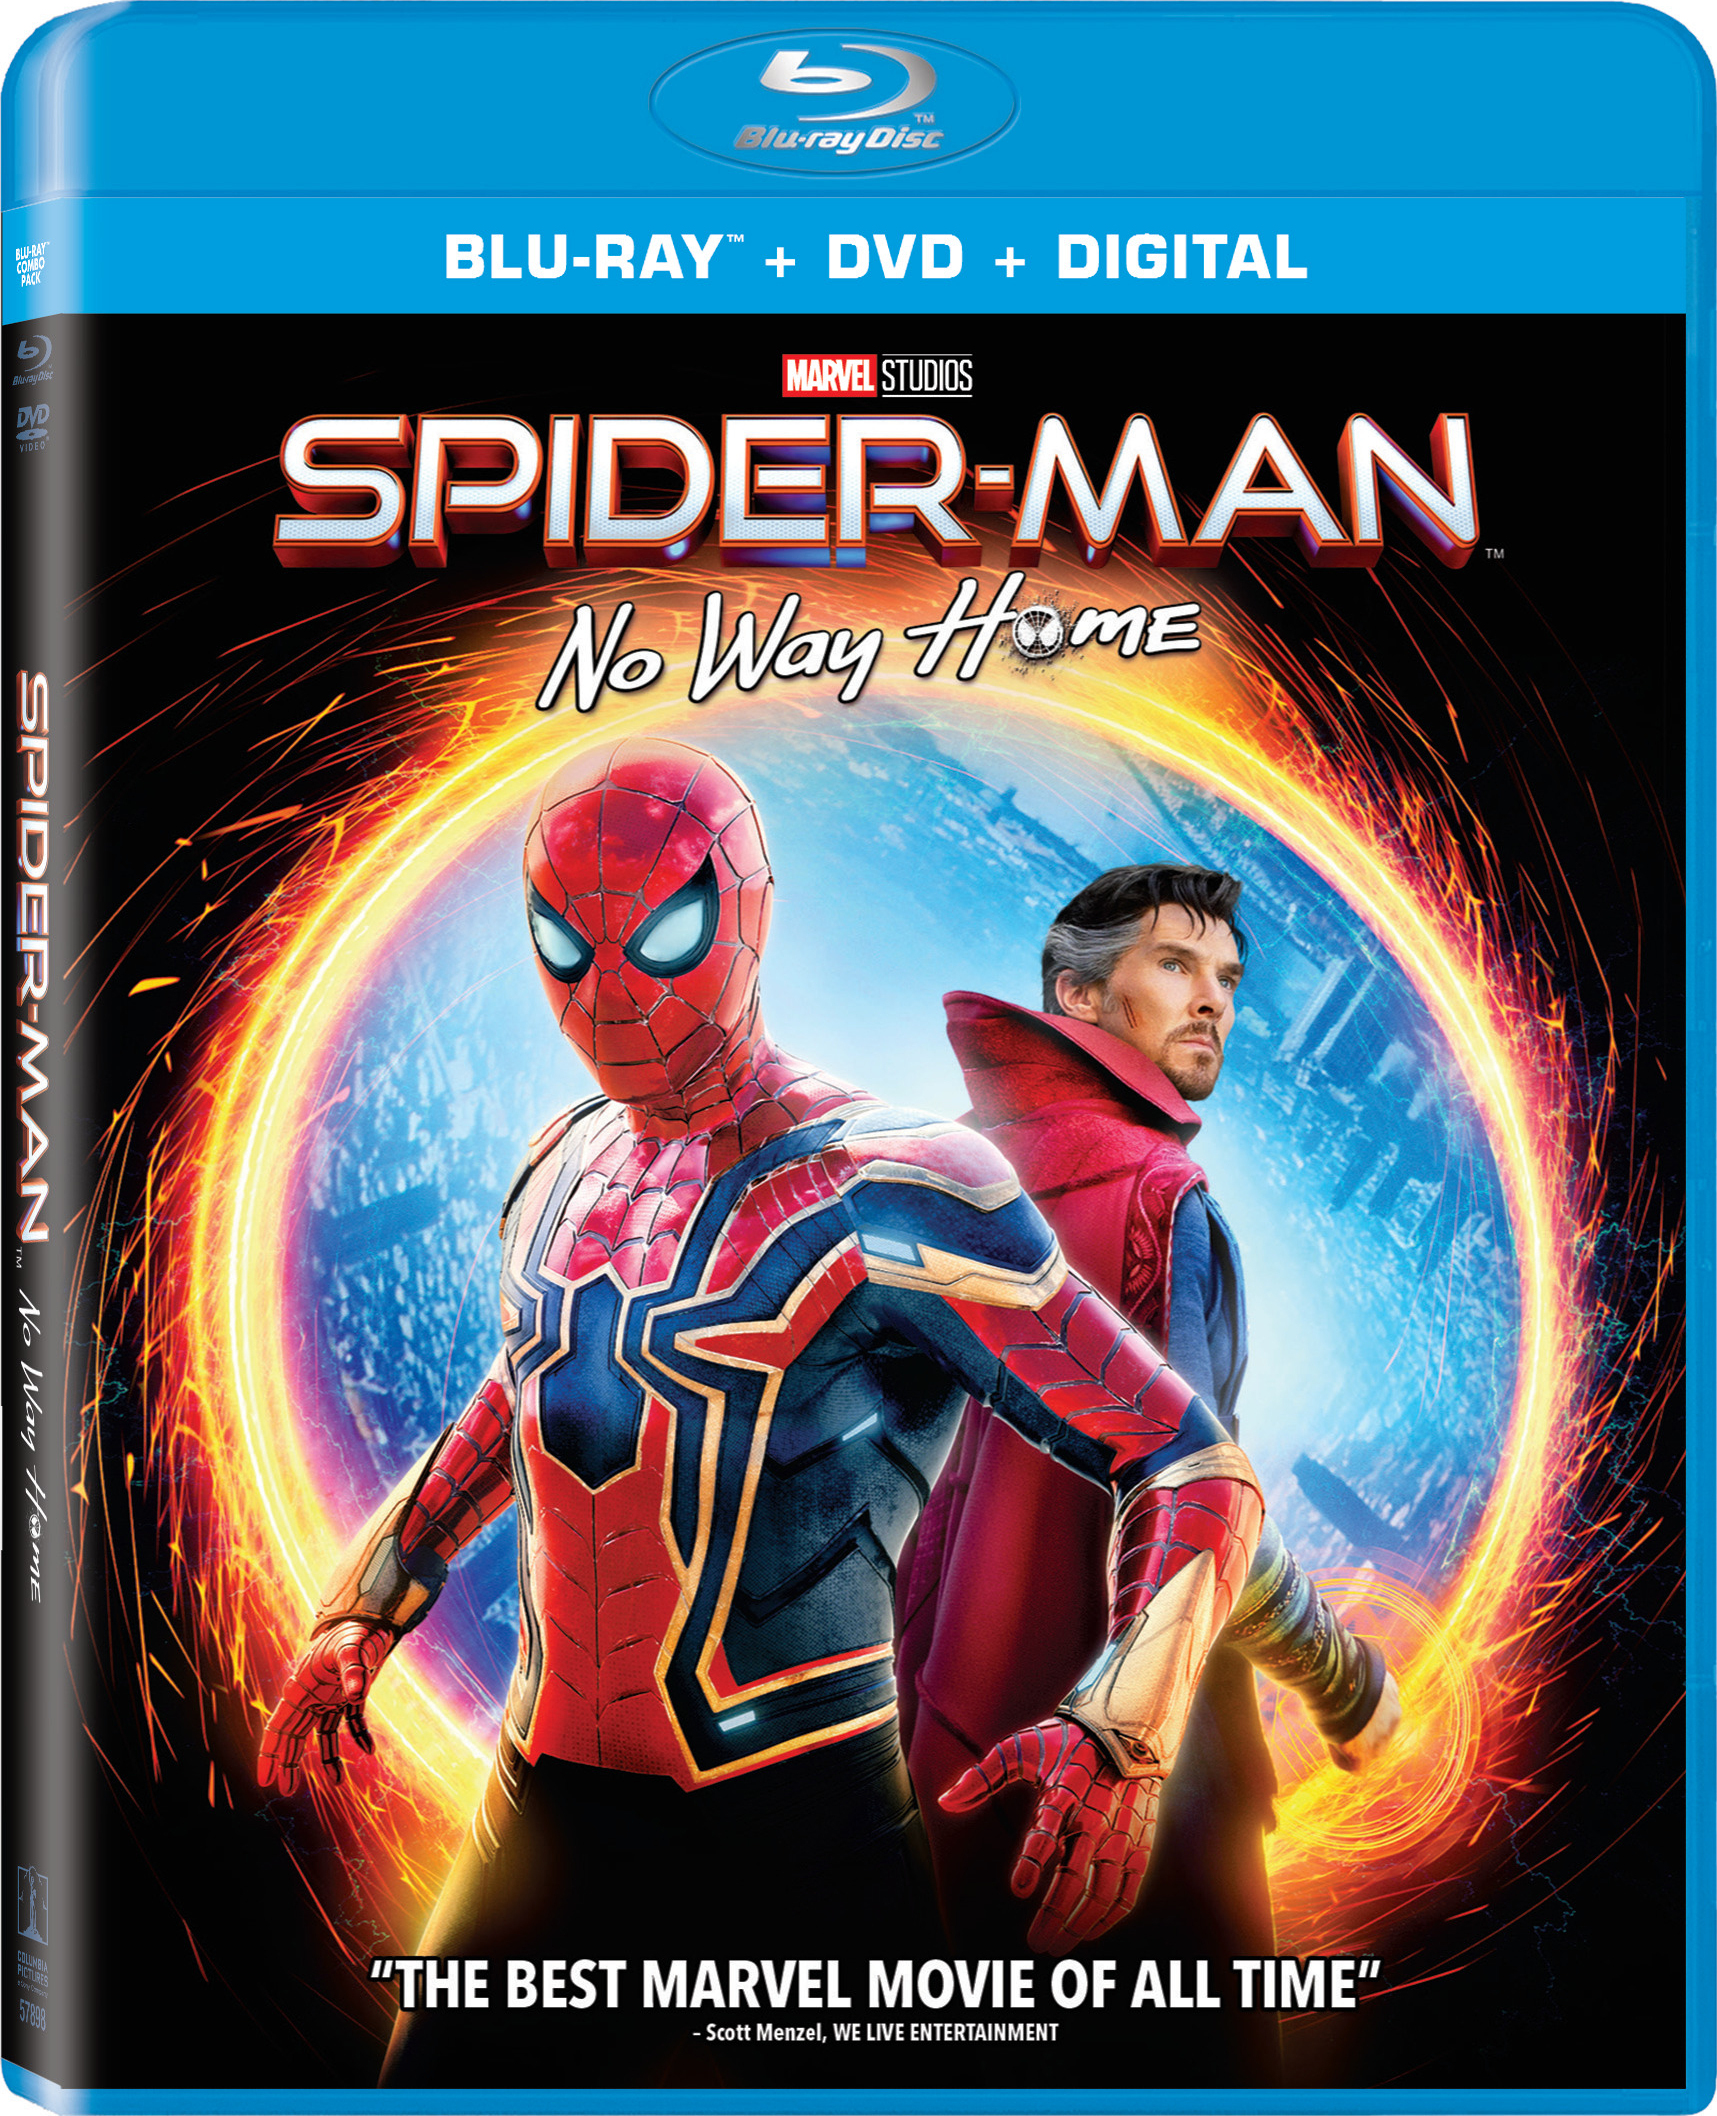 Spider-Man: No Way Home (2021) Spider-Man: Sin Camino a Casa (2021) [AC3 5.1 + SUP] [Blu Ray] [GooglePlay] 289848_front